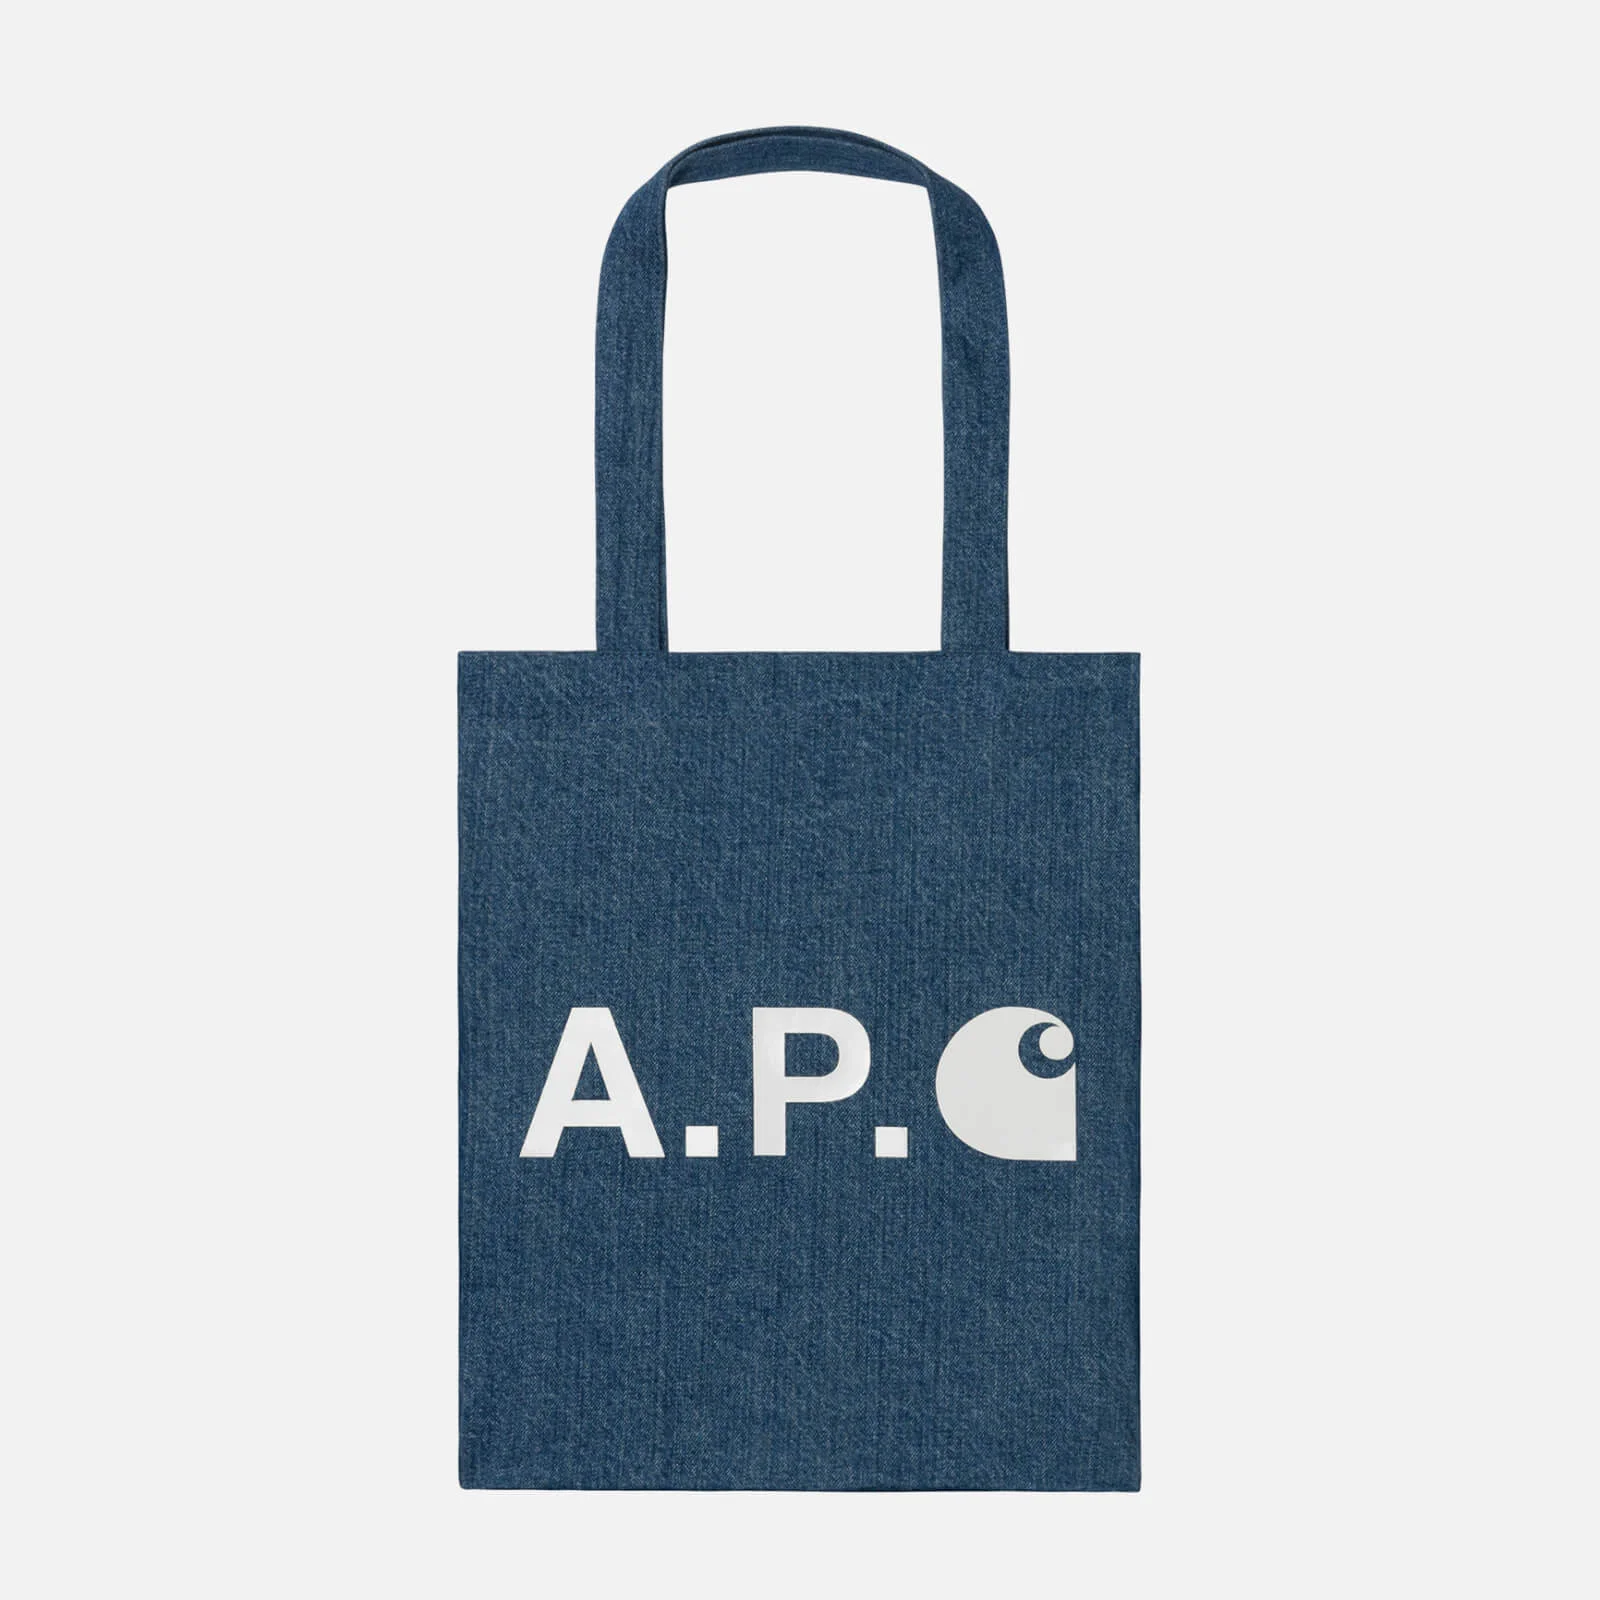 A.P.C. X Carhartt Men's Alan Tote Bag - Indigo Image 1